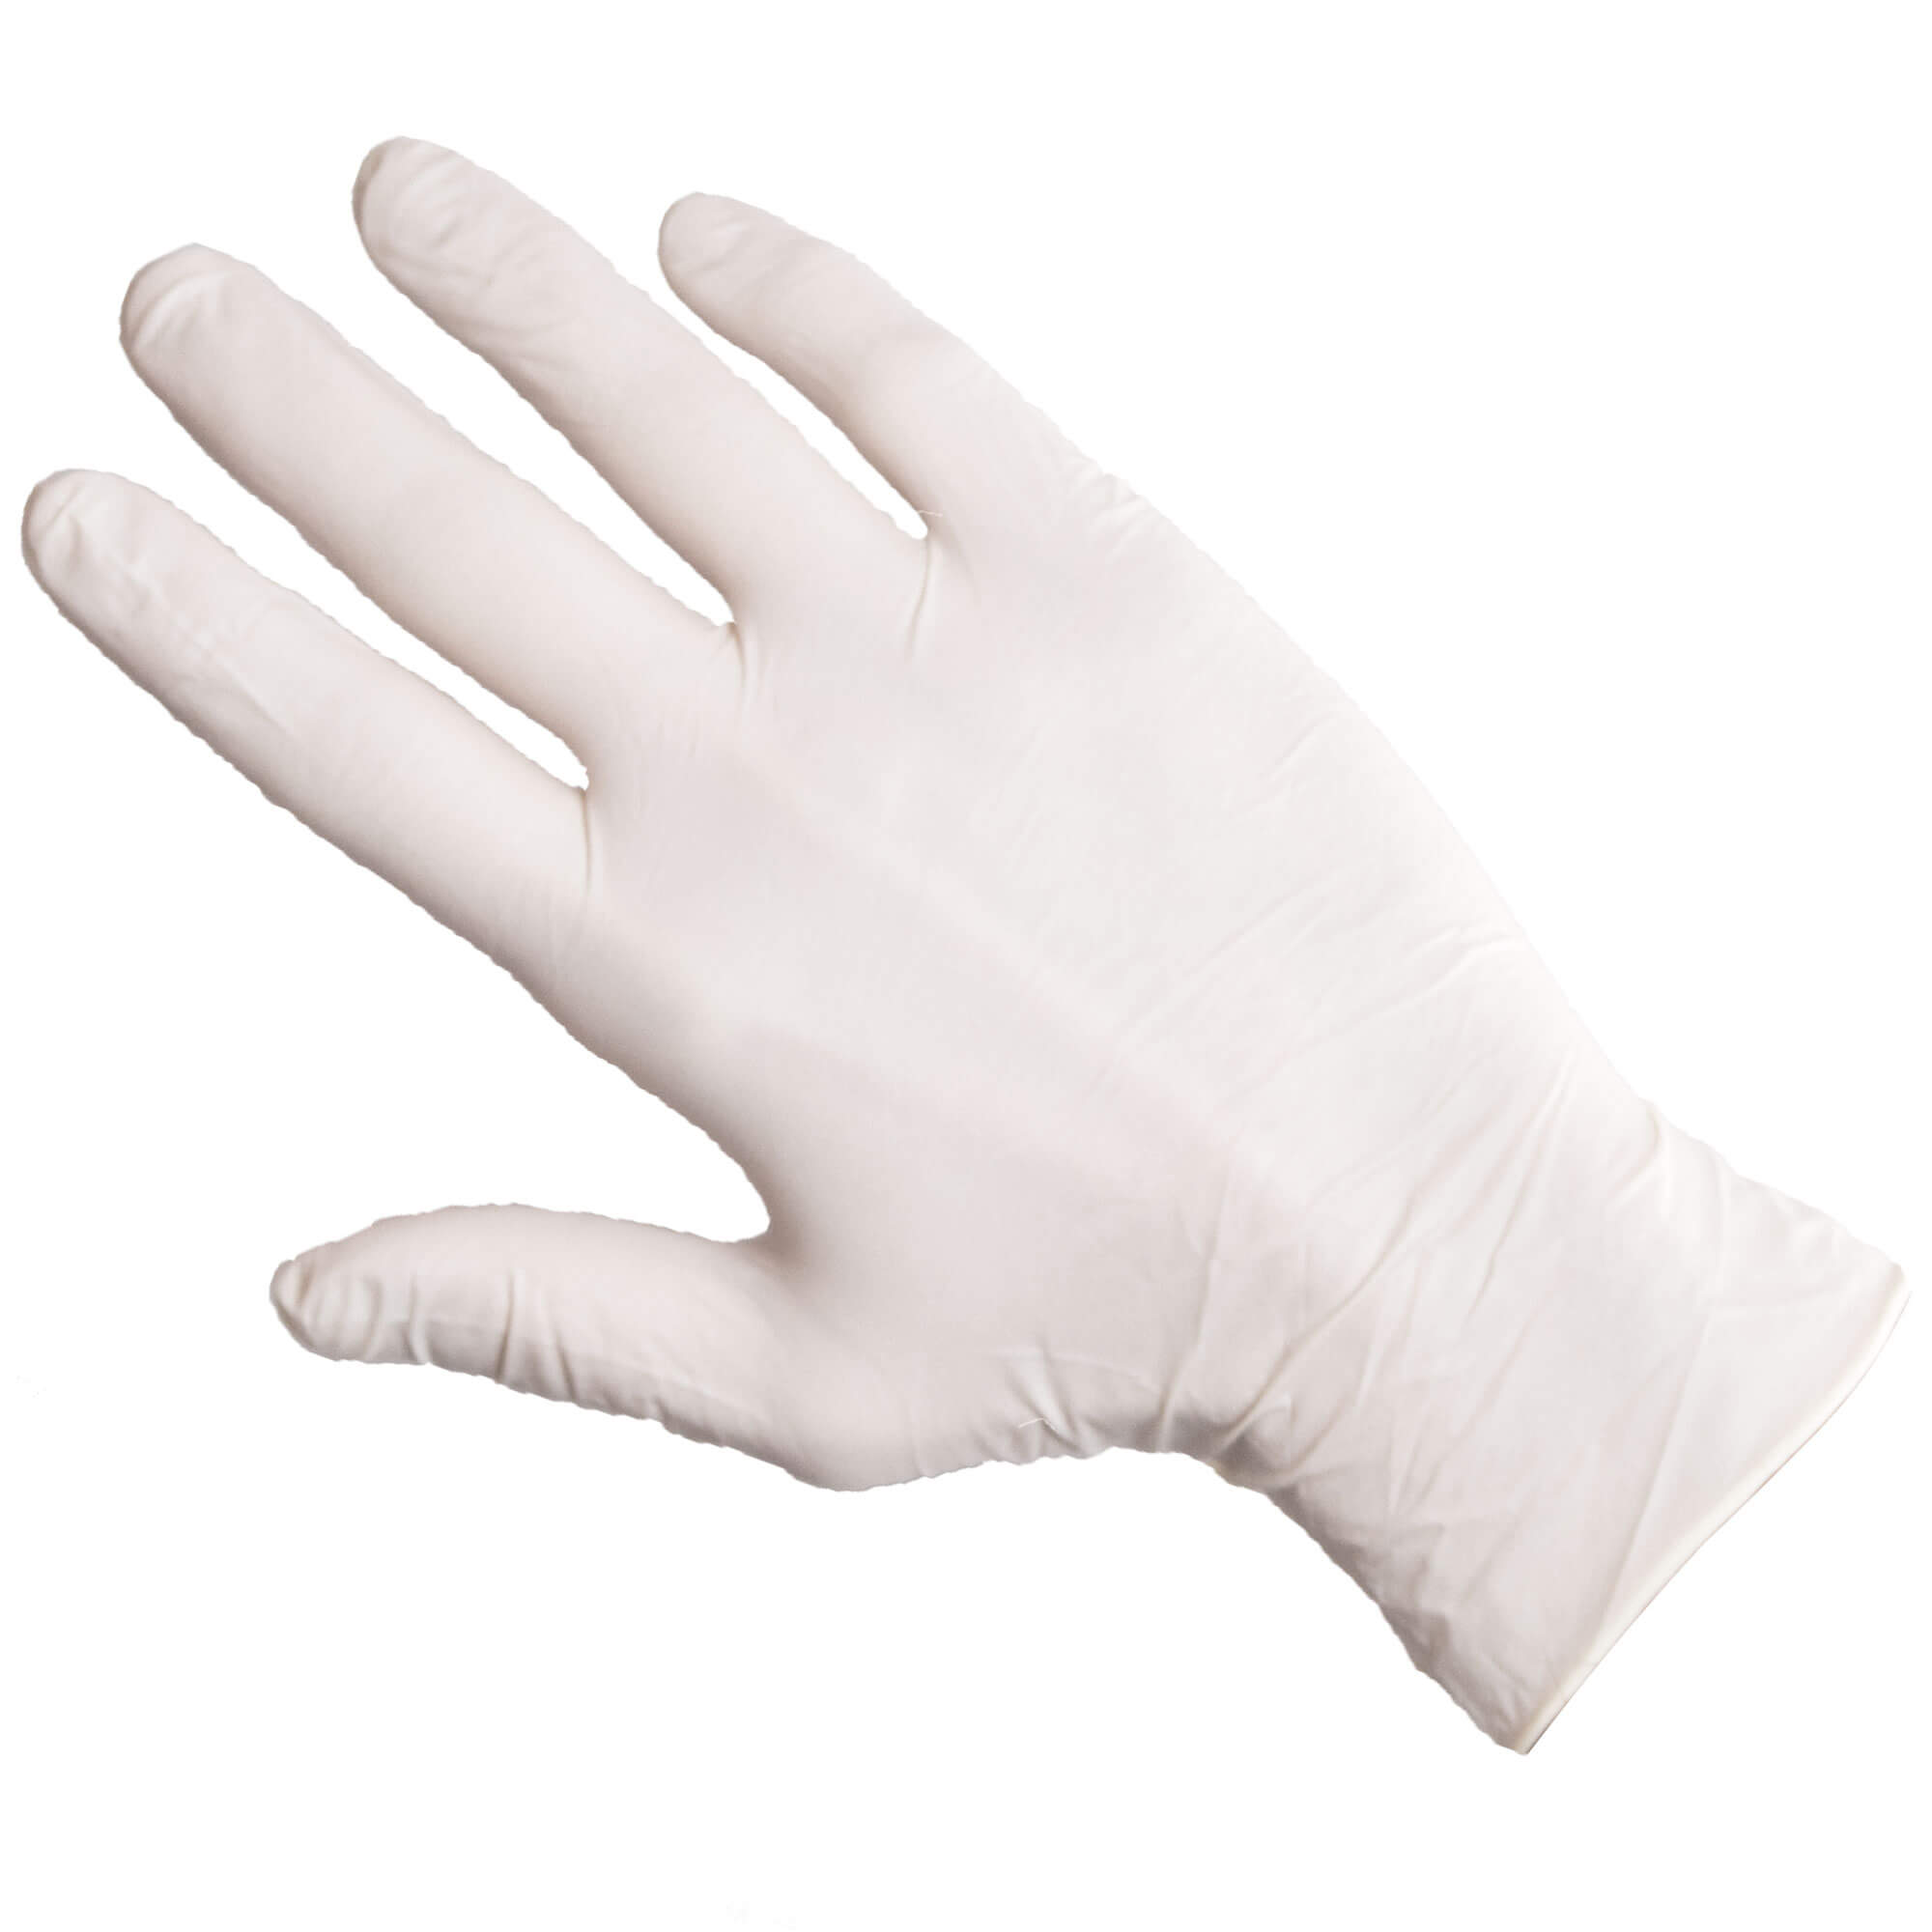 Handschuhe Nitril weiß - S (100 Stk.)